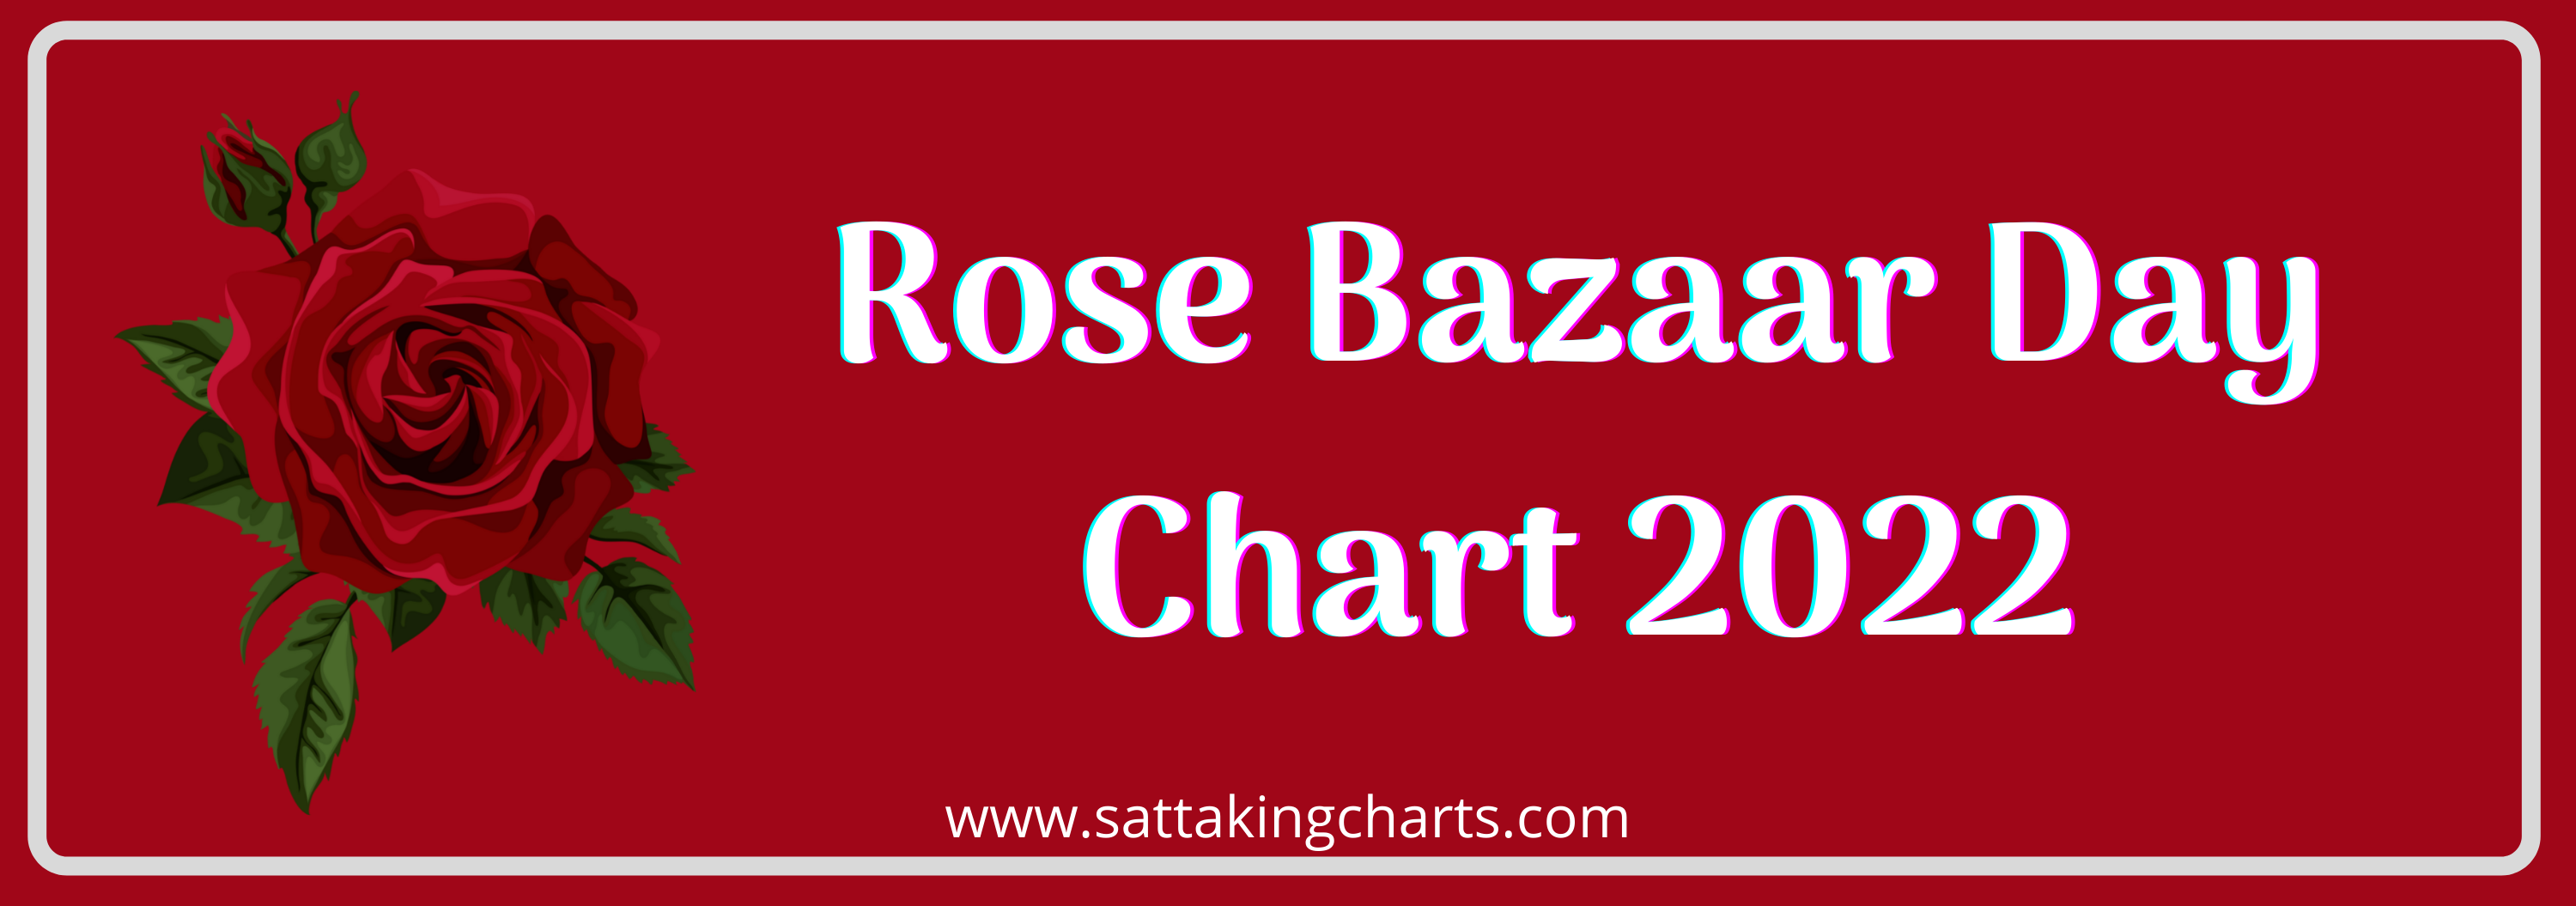 Rose Bazaar Day Chart